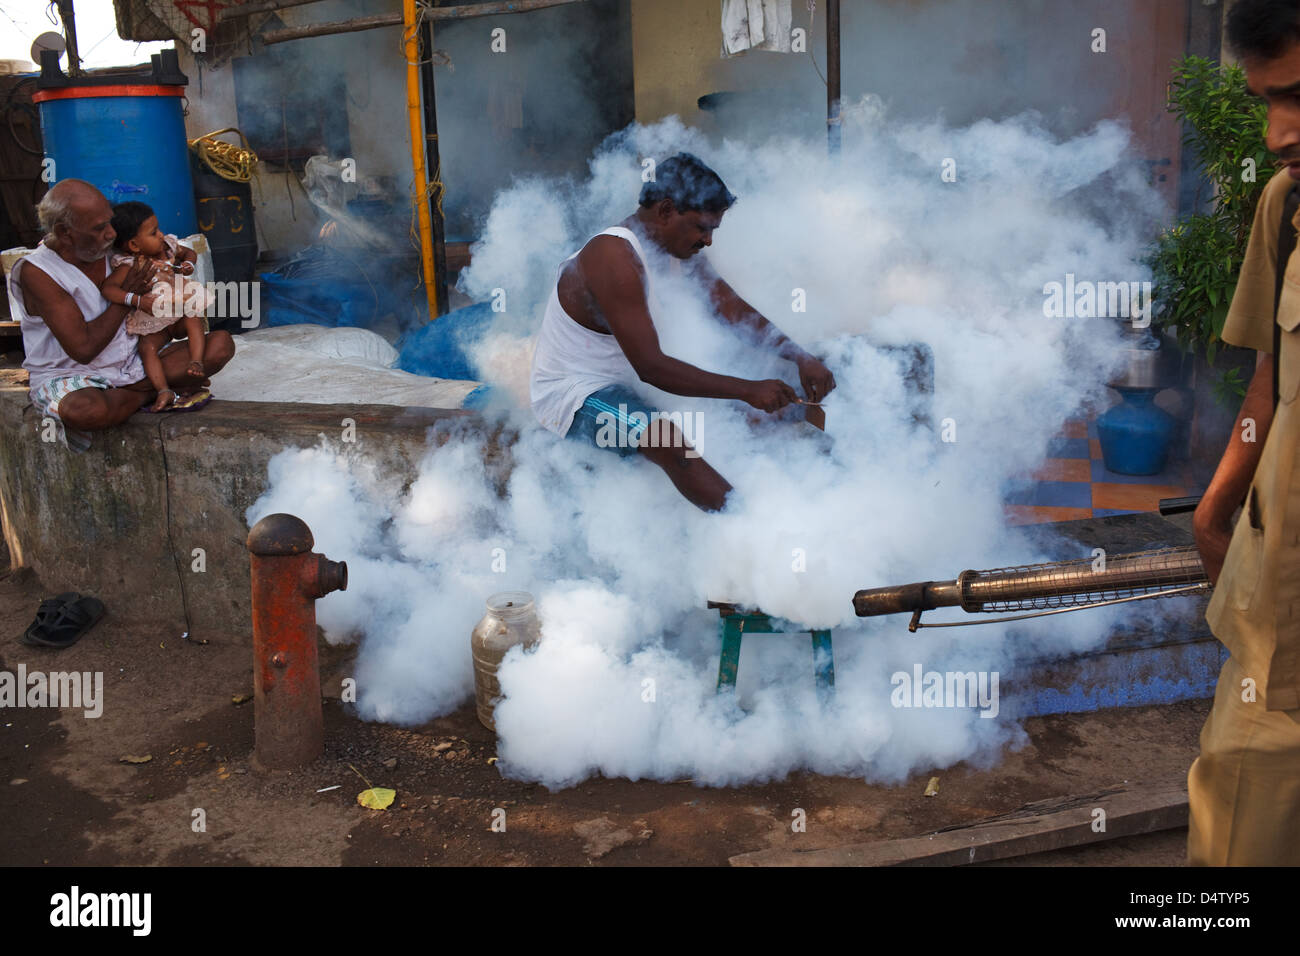 Anti-dengue fumigating to kill mosquitoes spreading malaria and dengue fever in a slum in Colaba, Mumbai, India. Stock Photo